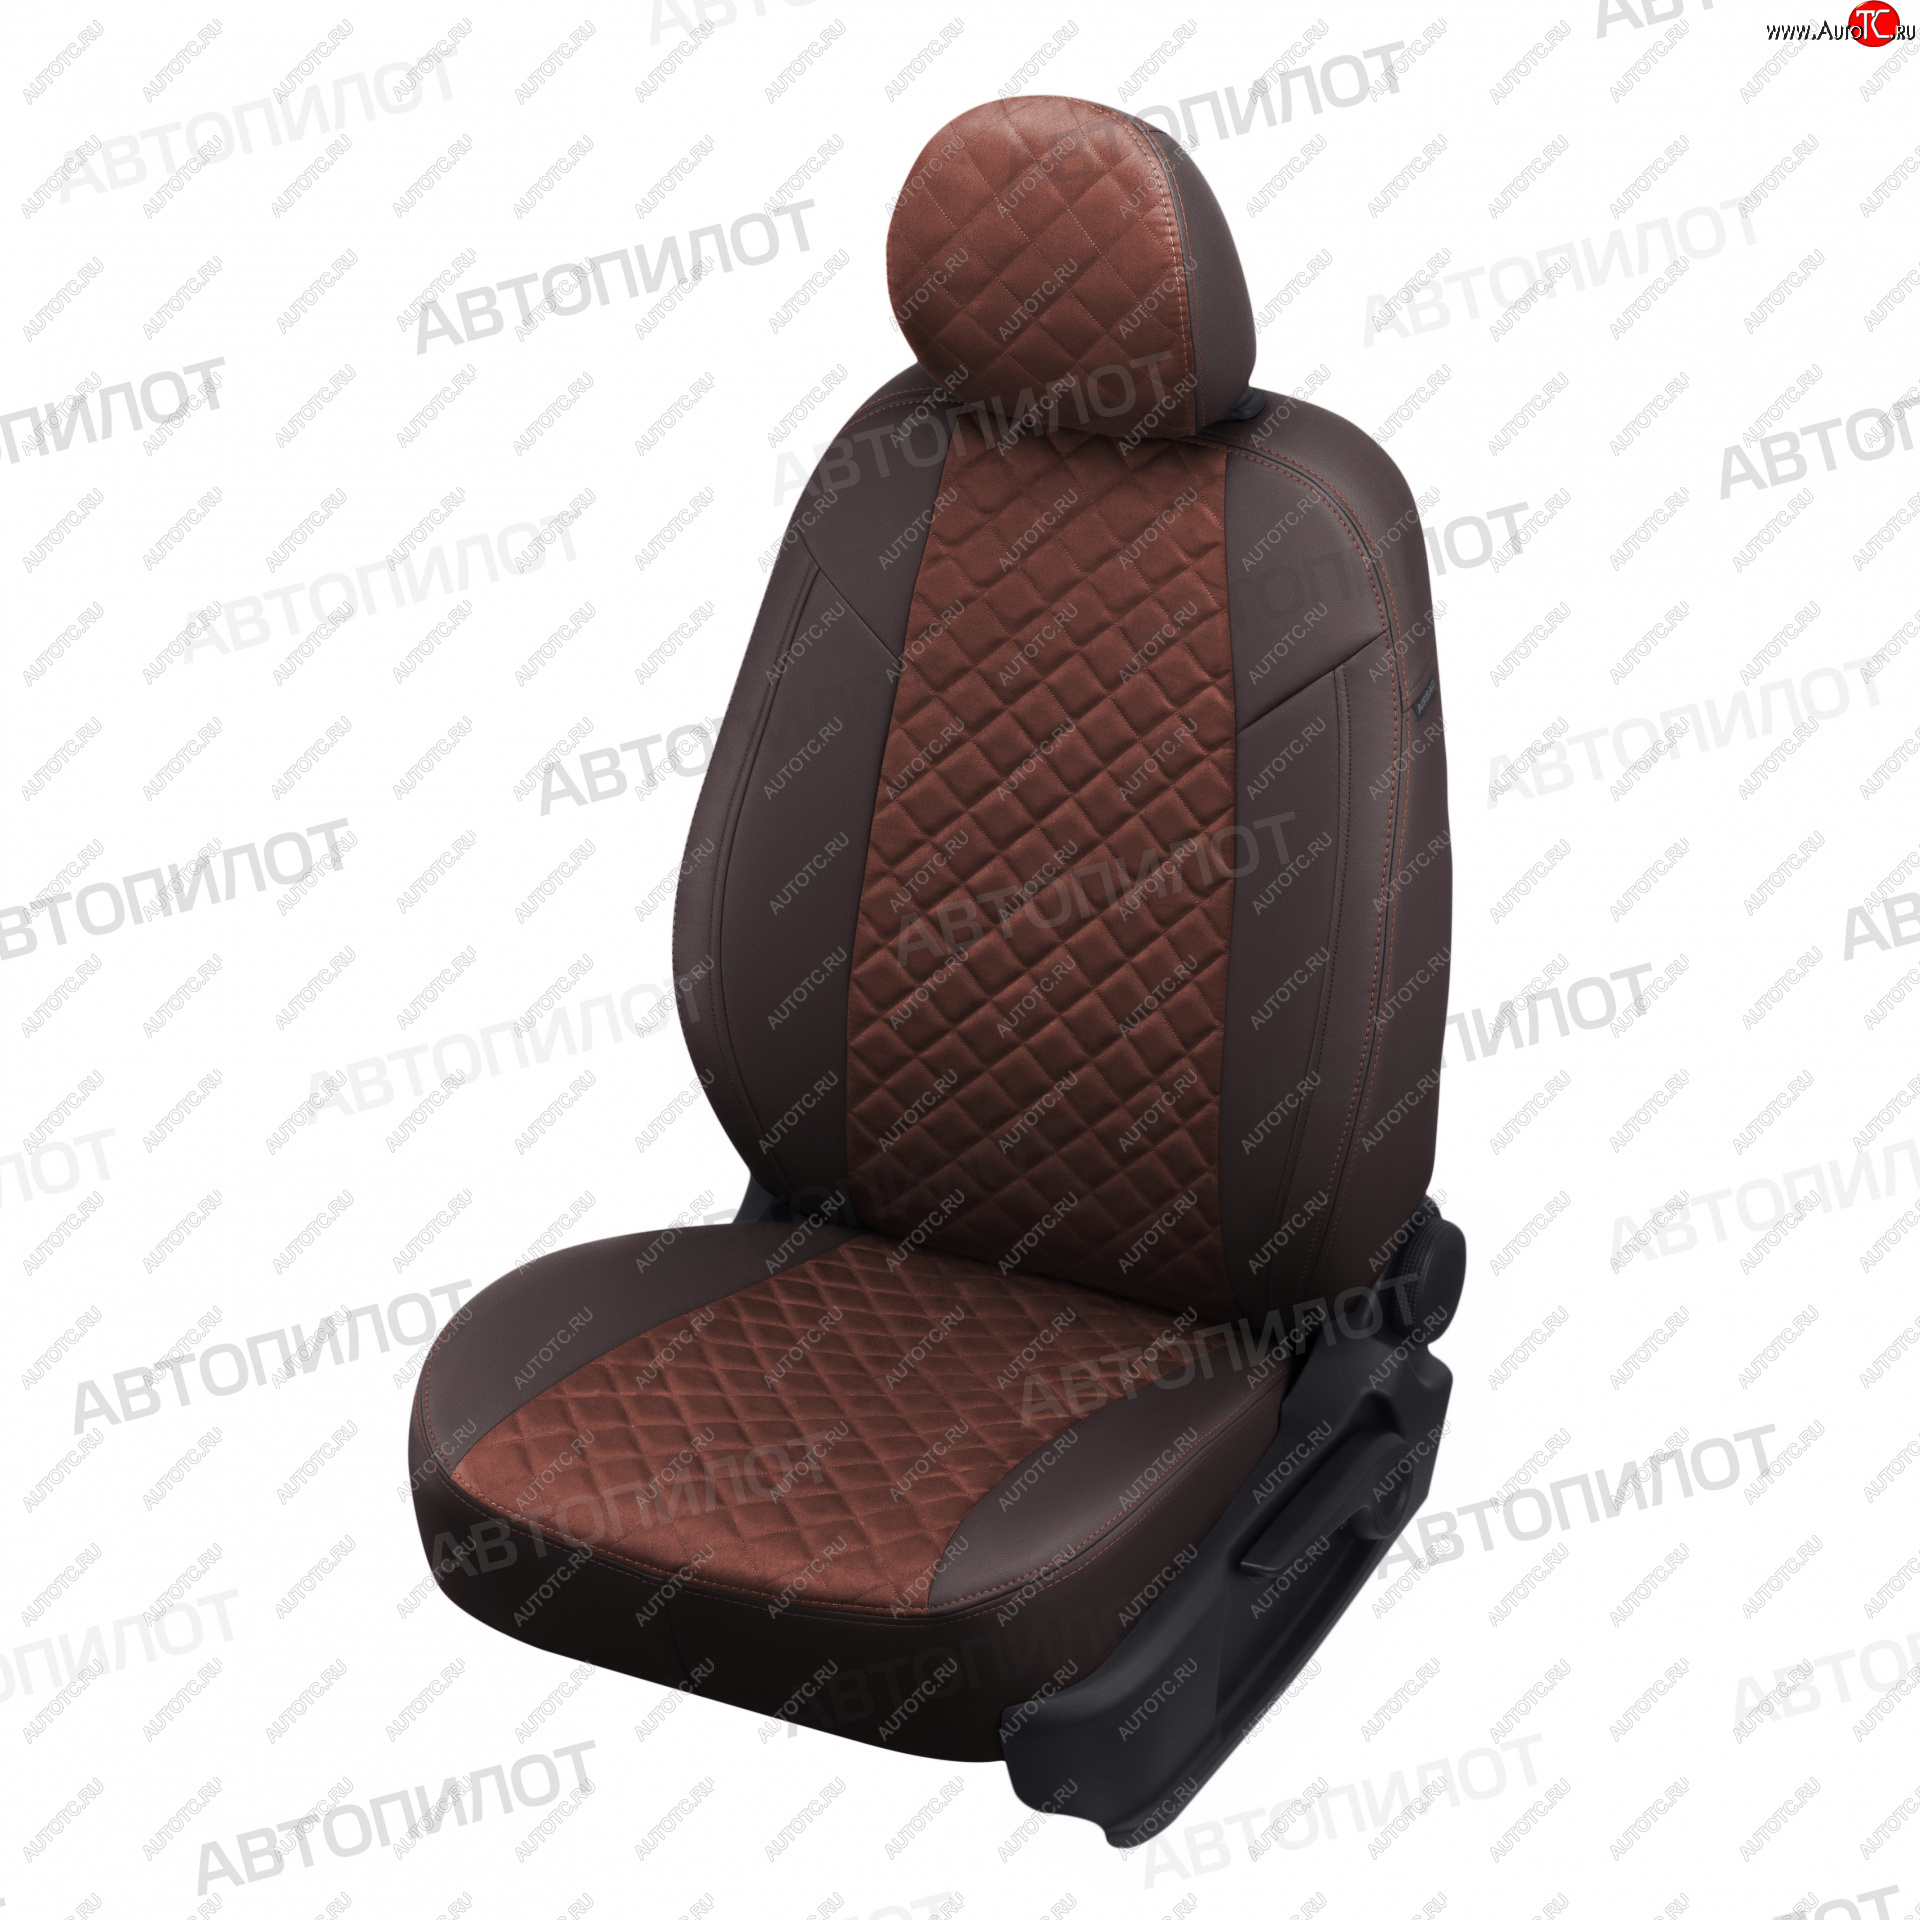 13 999 р. Чехлы сидений (экокожа/алькантара) Автопилот Ромб  BMW 1 серия  E81 (2007-2012) (шоколад)